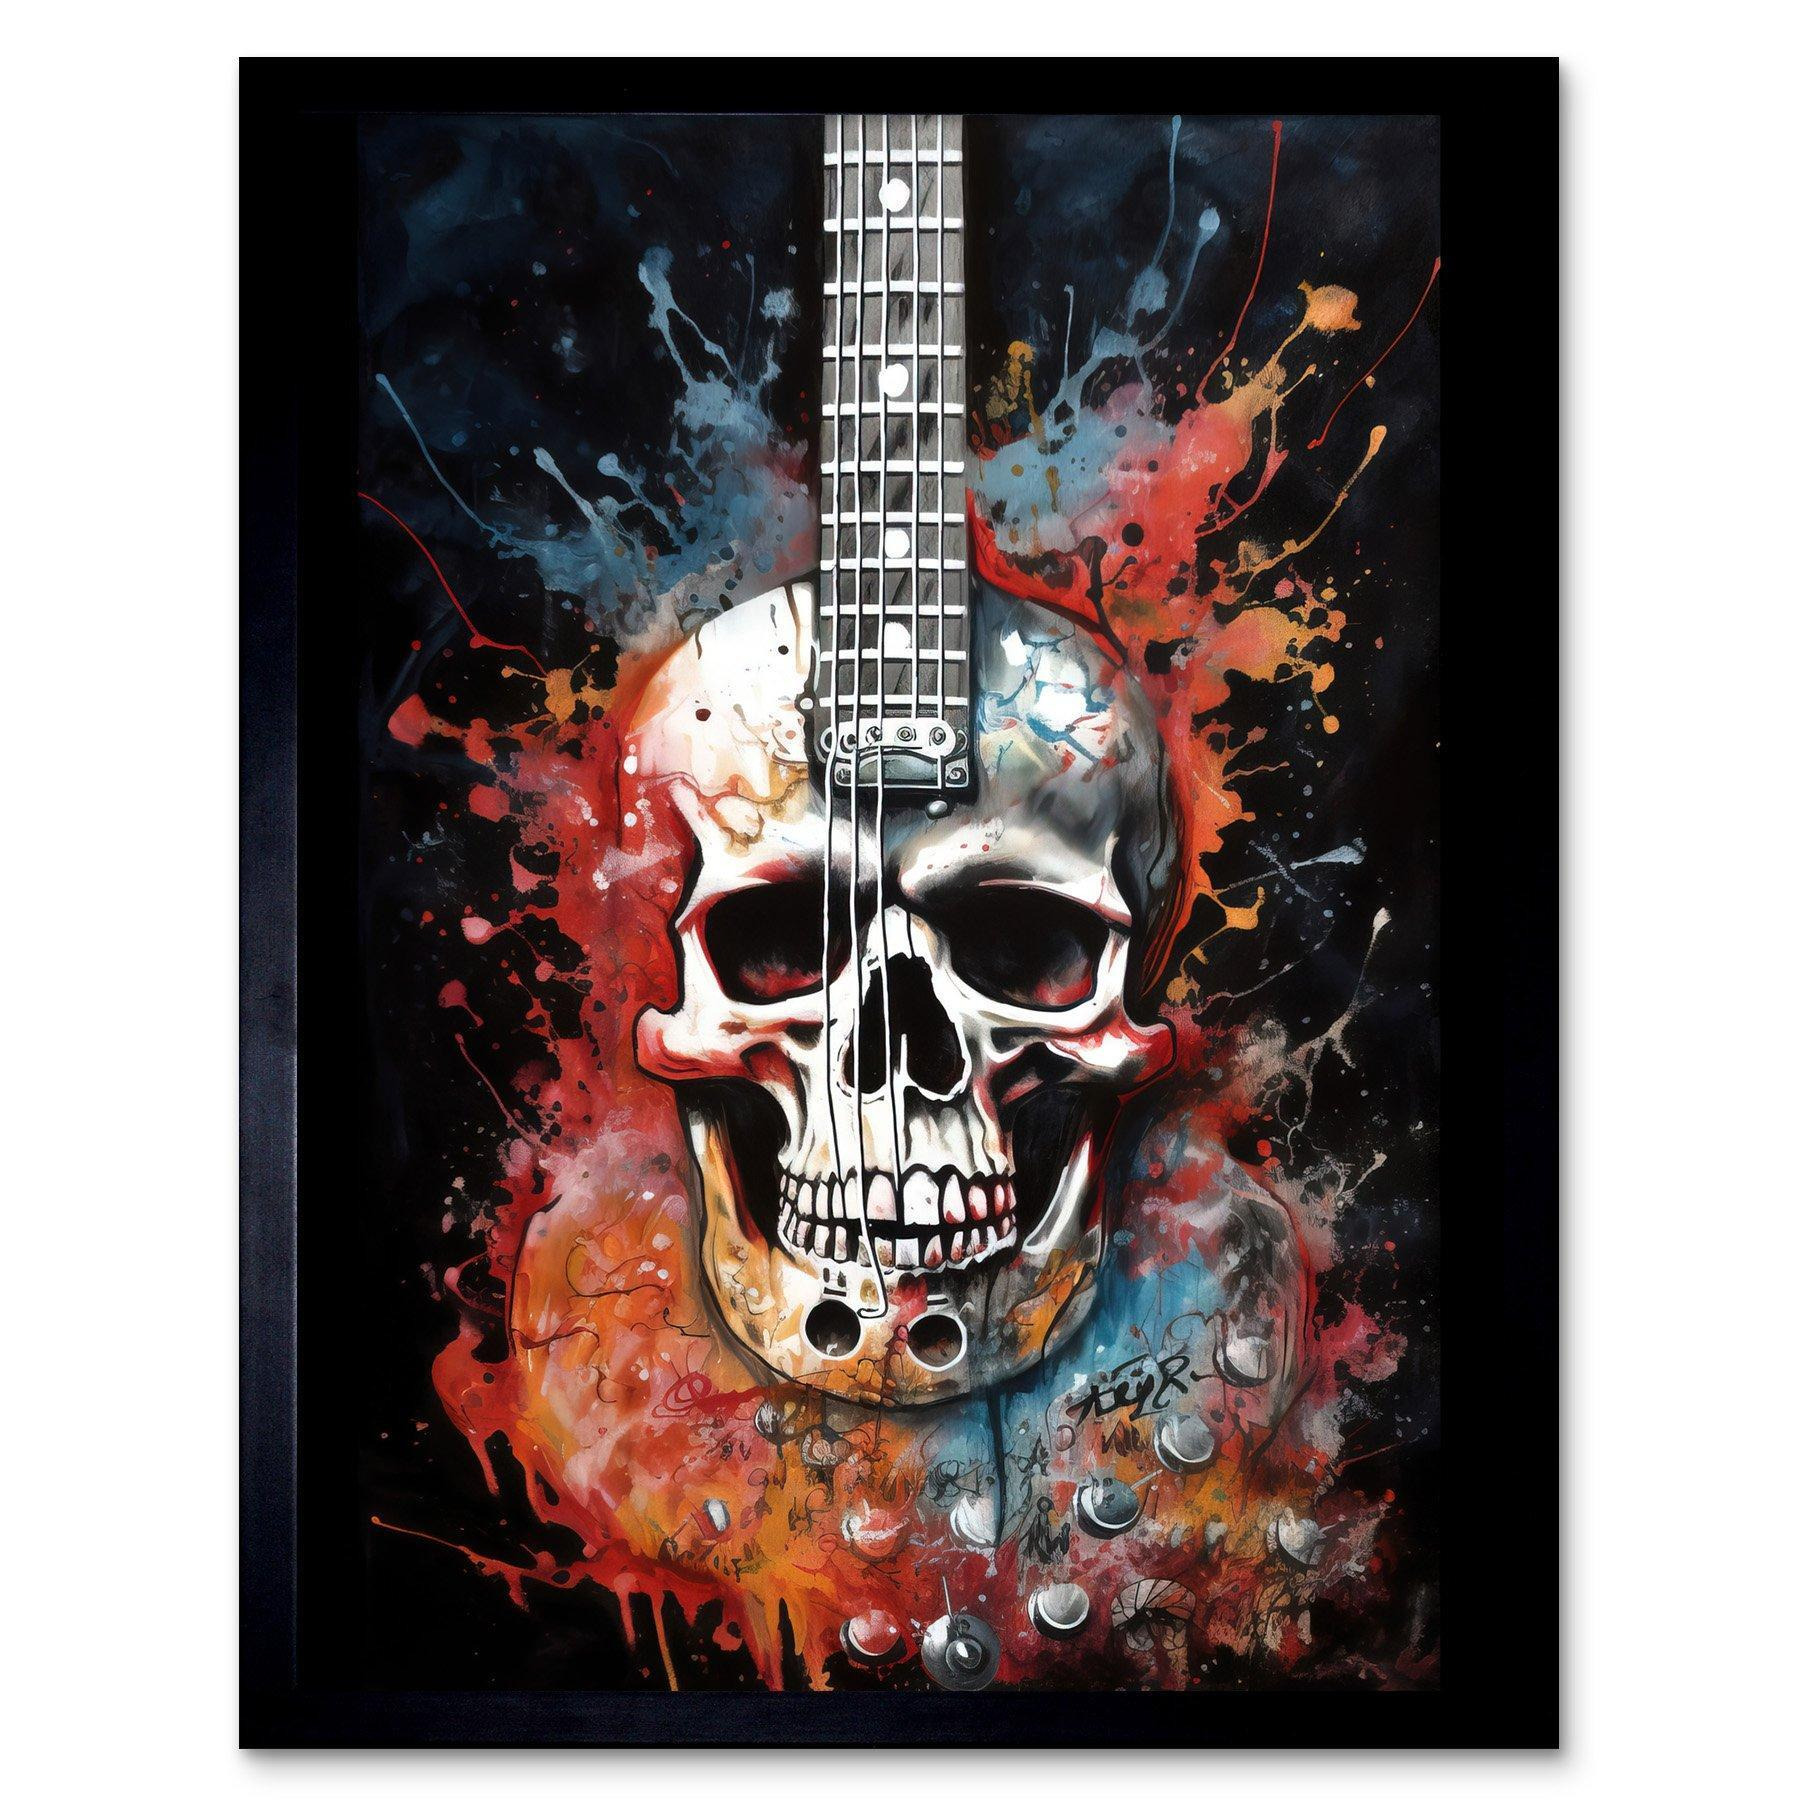 Electric Skull Guitar Death Metal Music Concept Splatter Art Modern Acrylic Painting Art Print Framed Poster Wall Decor 12x16 inch - image 1